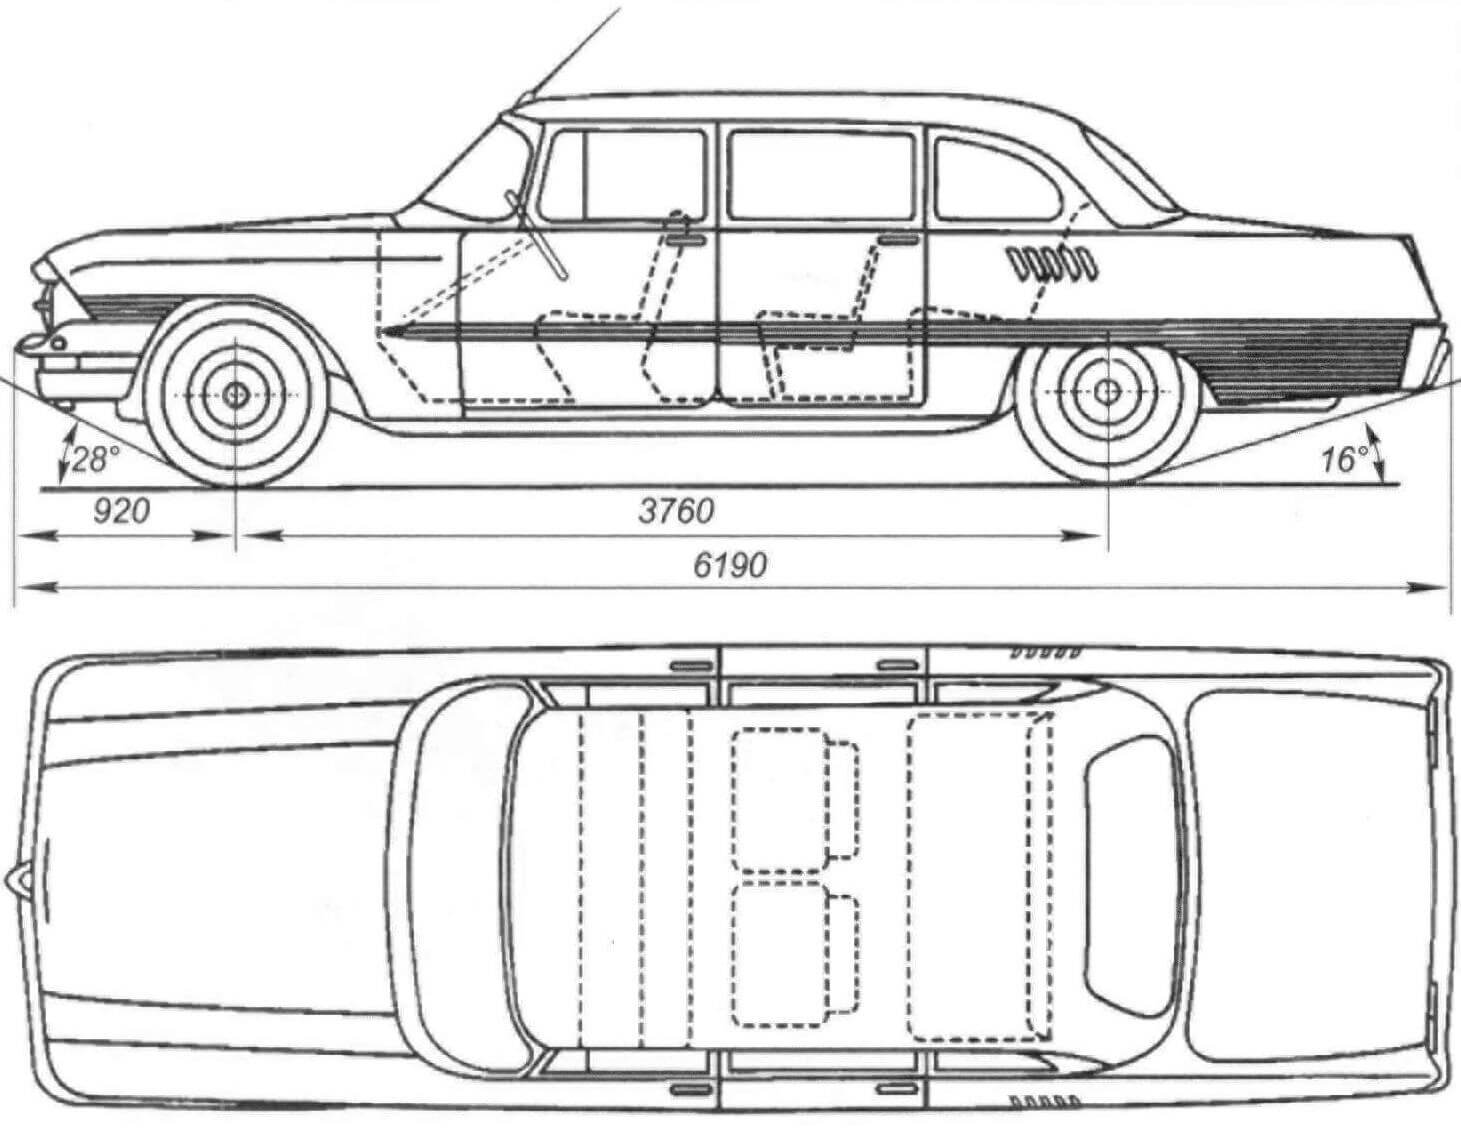 Габаритный чертеж автомобиля ЗИЛ-111Г